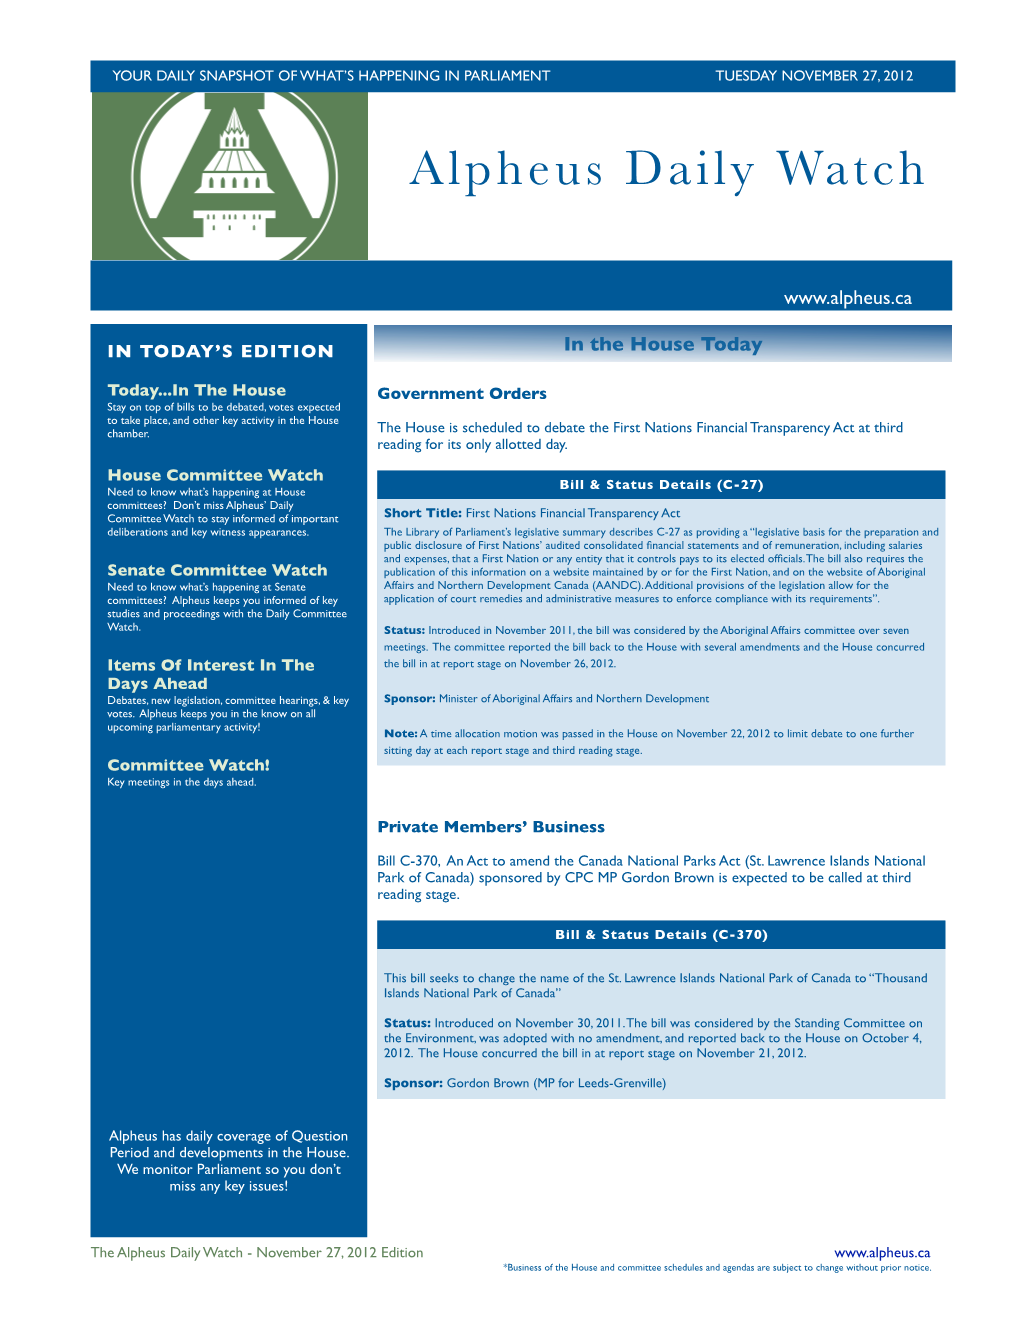 Alpheus Daily Watch